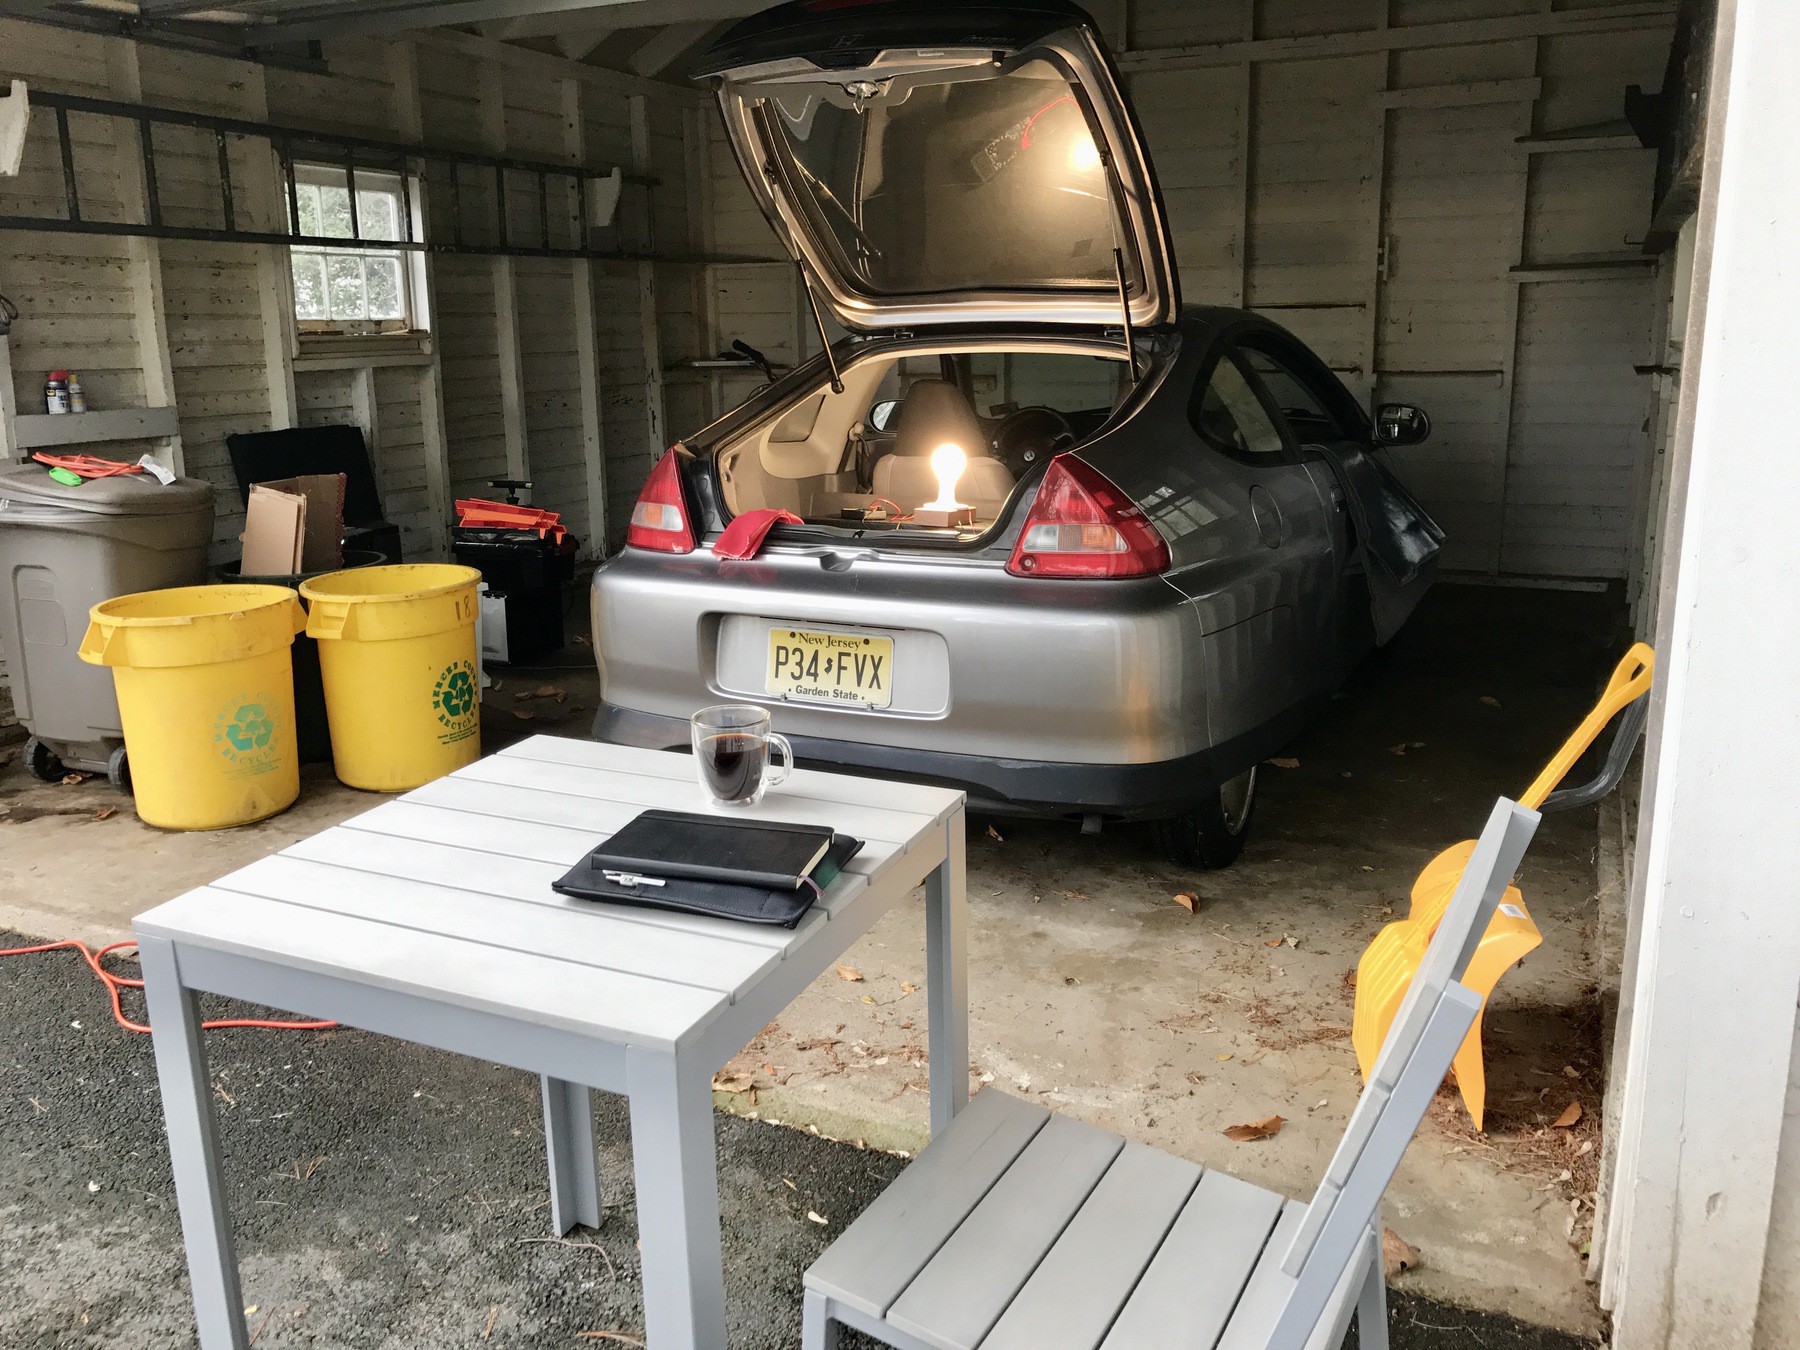 Discharging Honda Insight hybrid battery with light bulb in garage